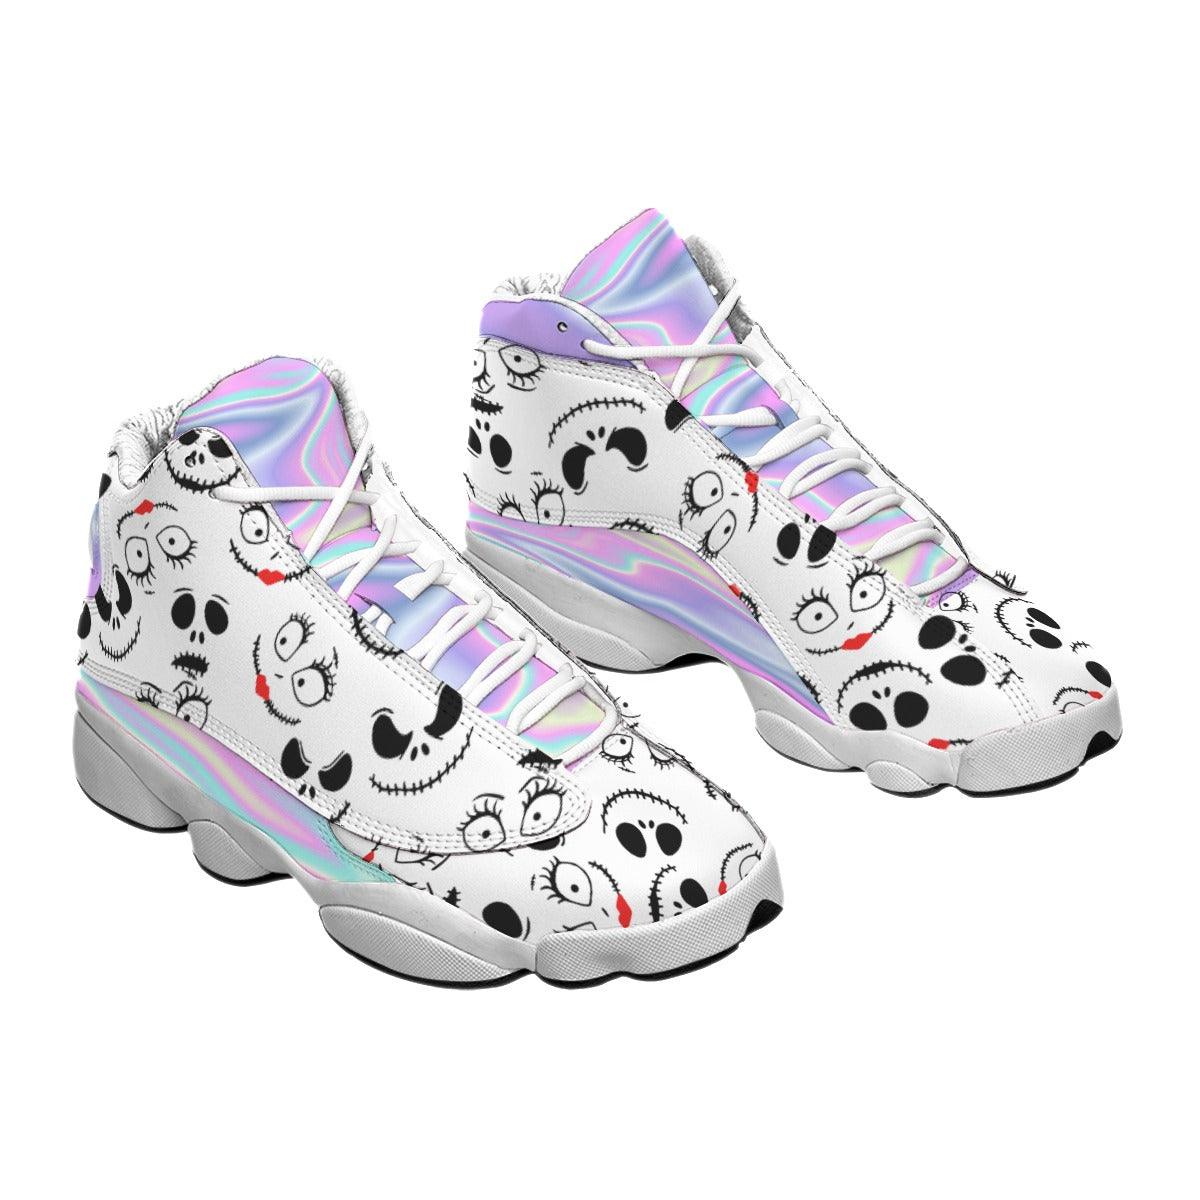 Nightmare Hologram Pattern Women's Curved Basketball Shoes Sneaker - Wonder Skull